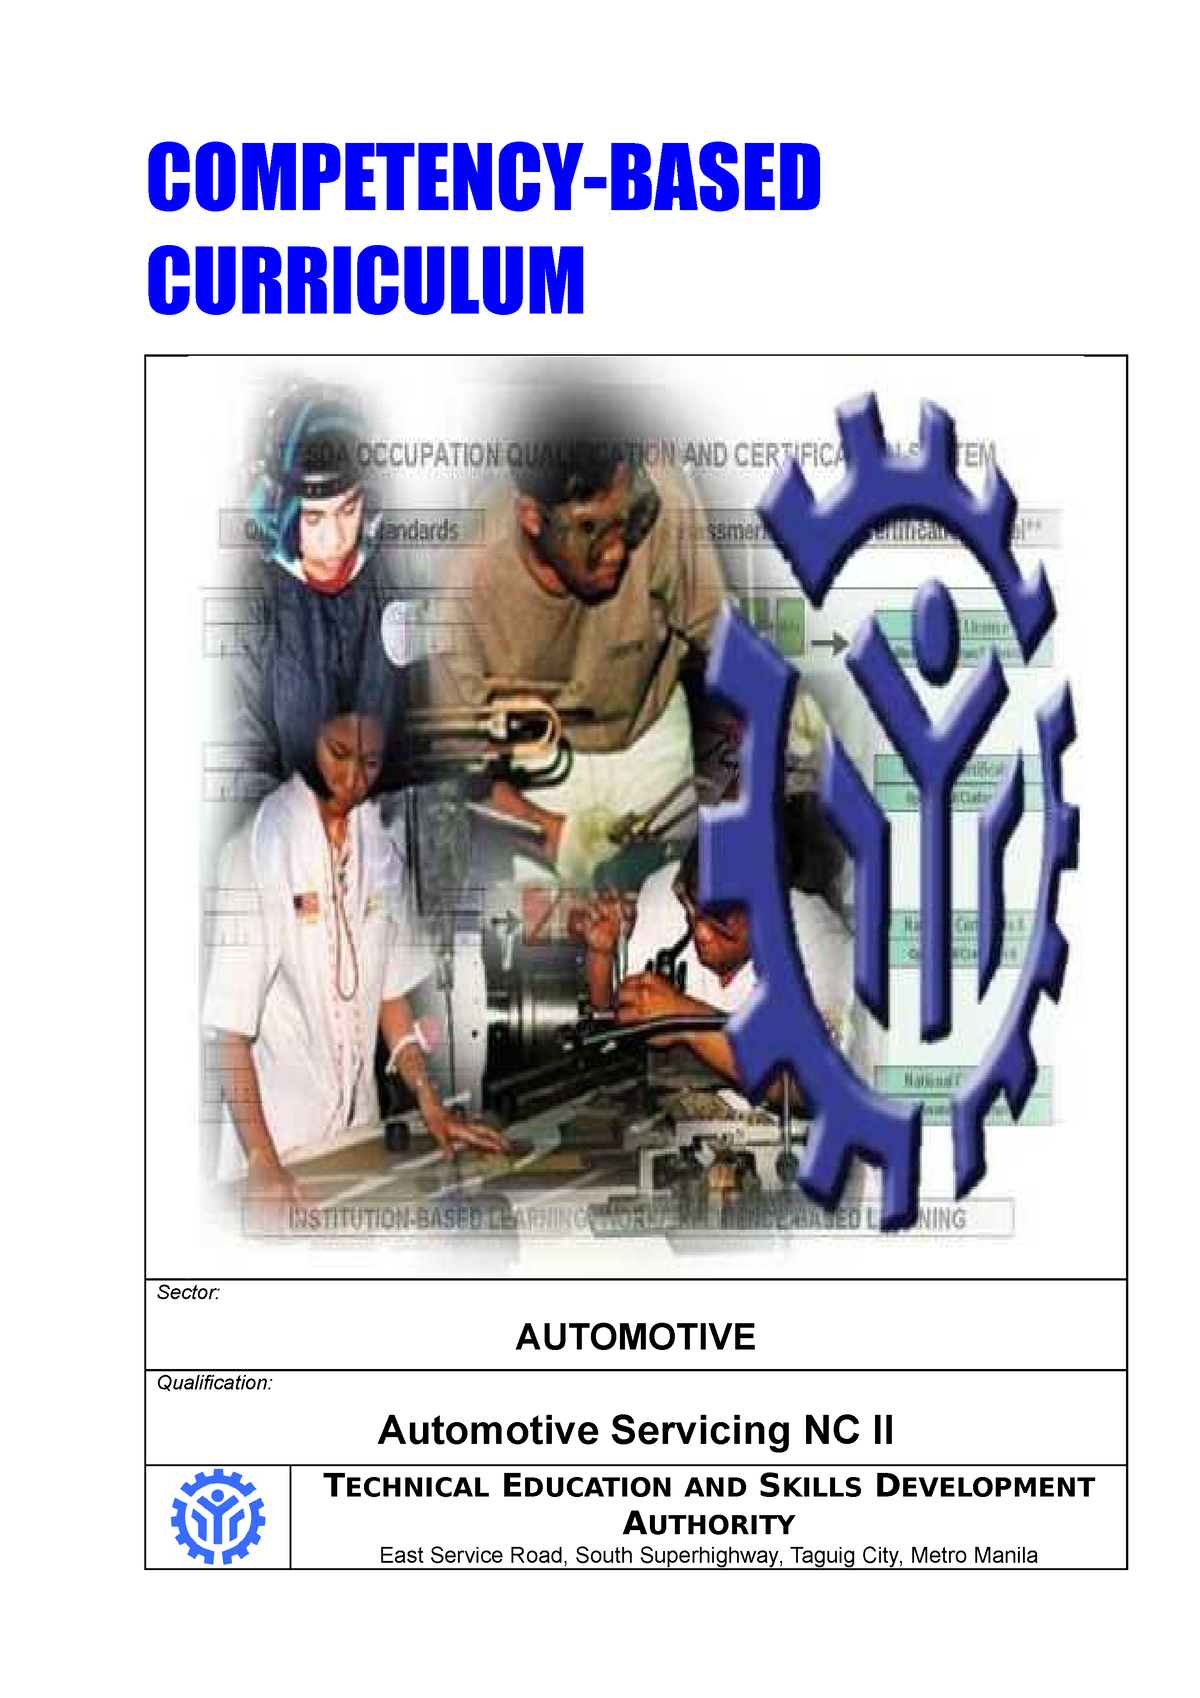 thesis about automotive servicing